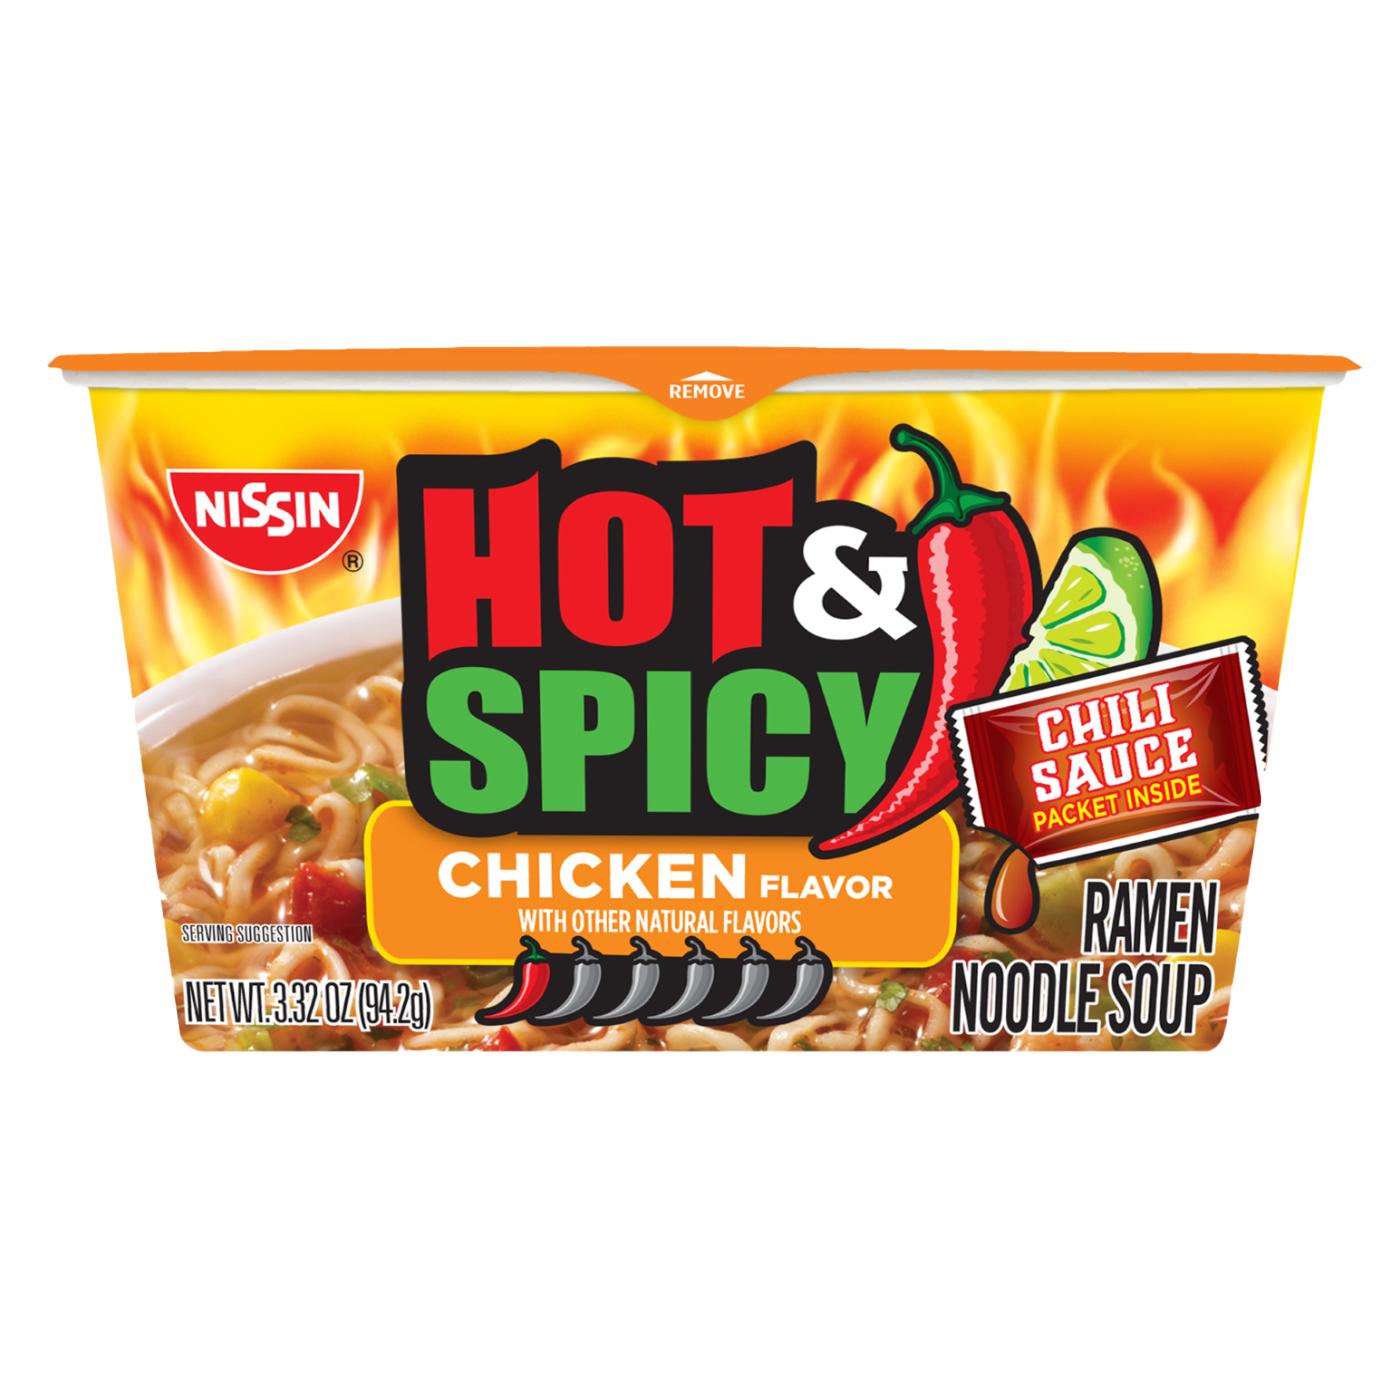 Nissin Hot & Spicy Chicken Flavor Ramen Noodle Soup; image 1 of 6